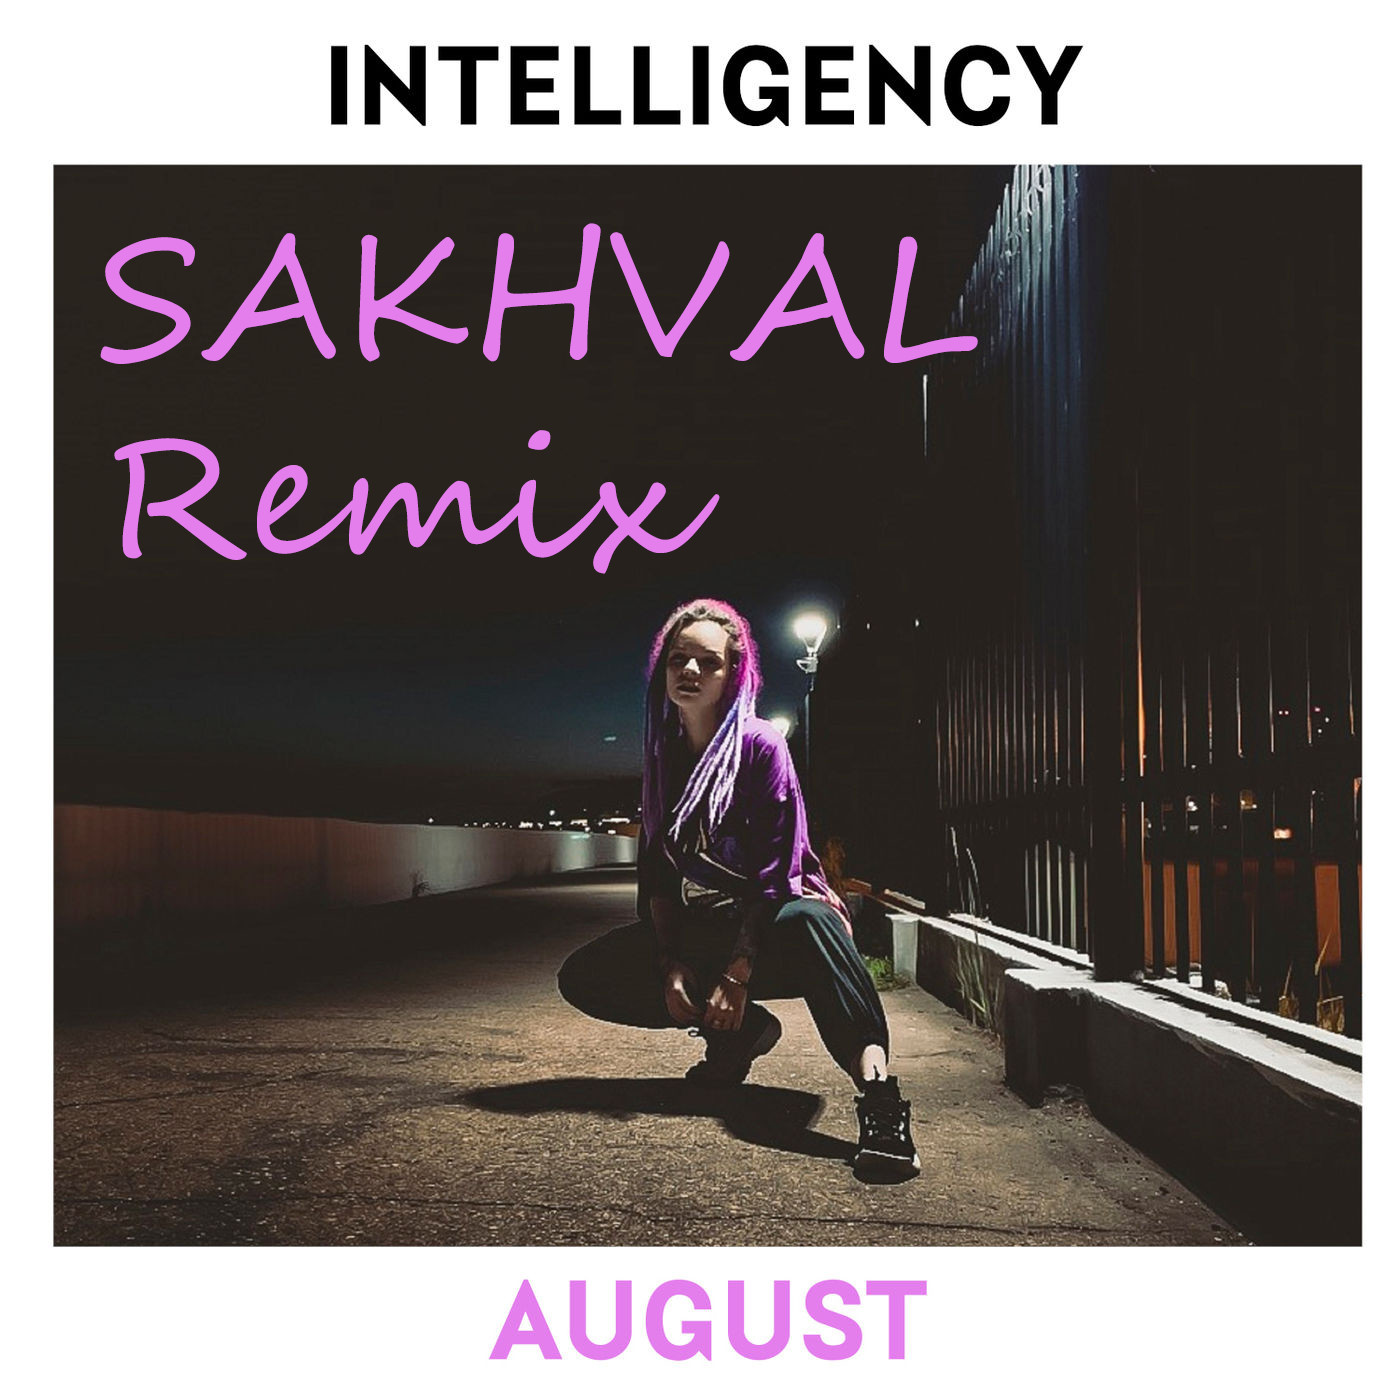 Extended remix mp3. Intelligence группа August. Август певец Intelligence. Август Intelligence обложка. August песня.